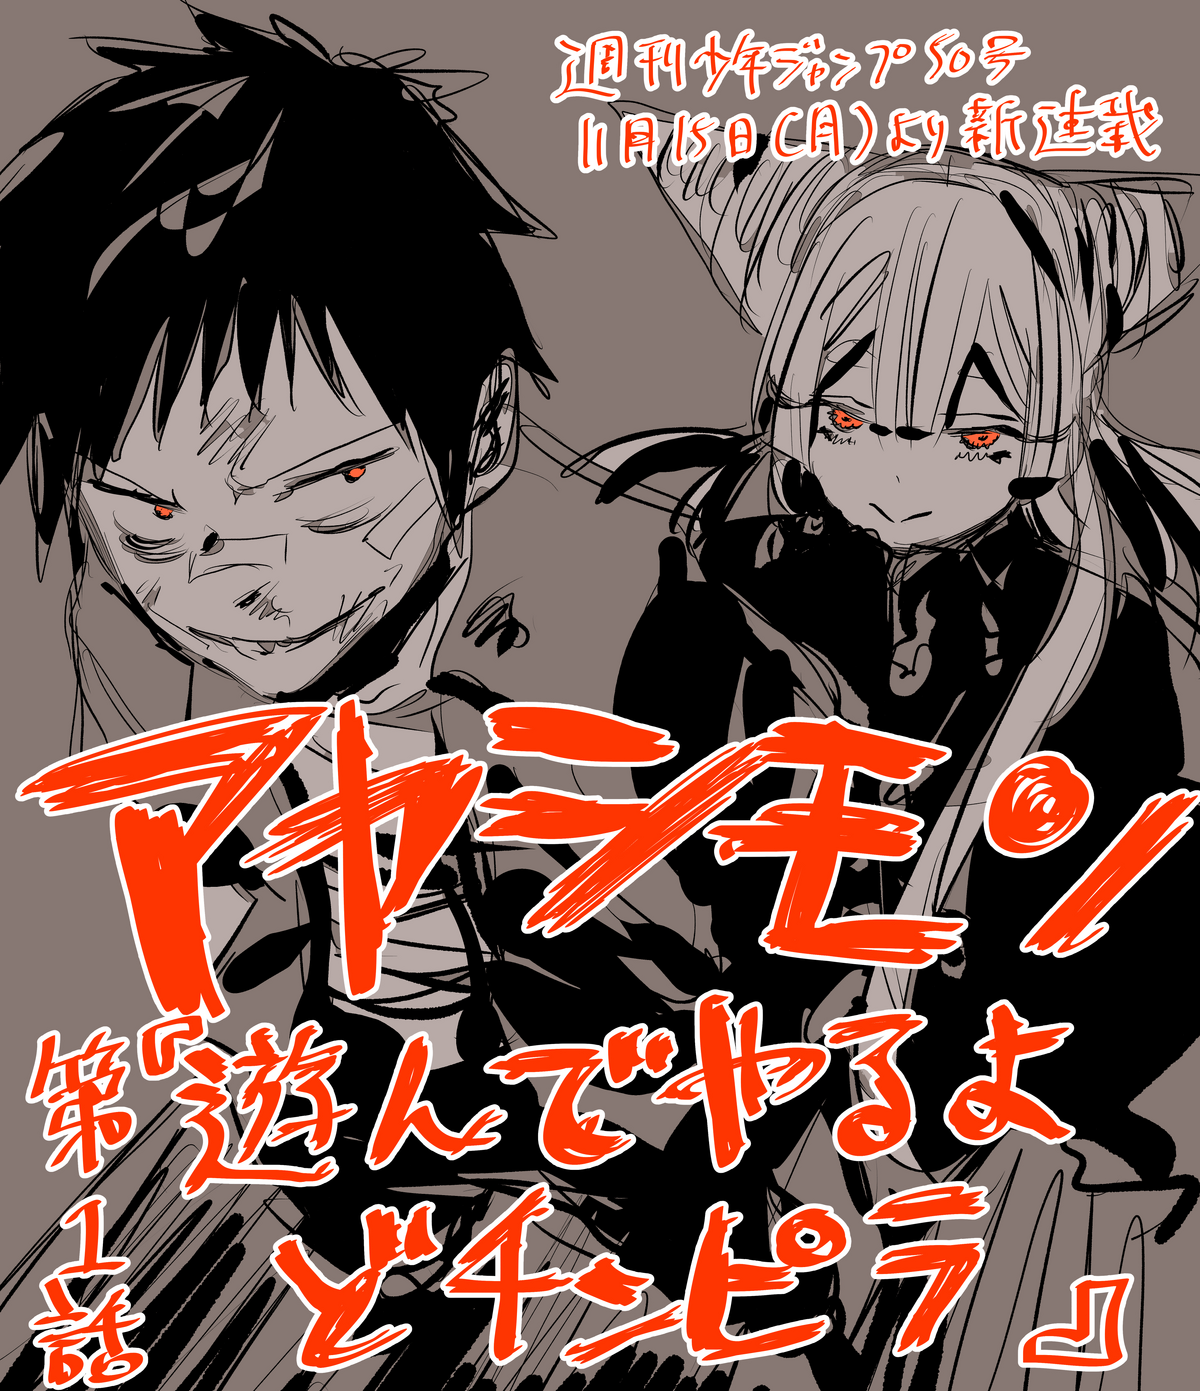 Hell's Paradise Manga Ends on January 25 - News - Anime News Network